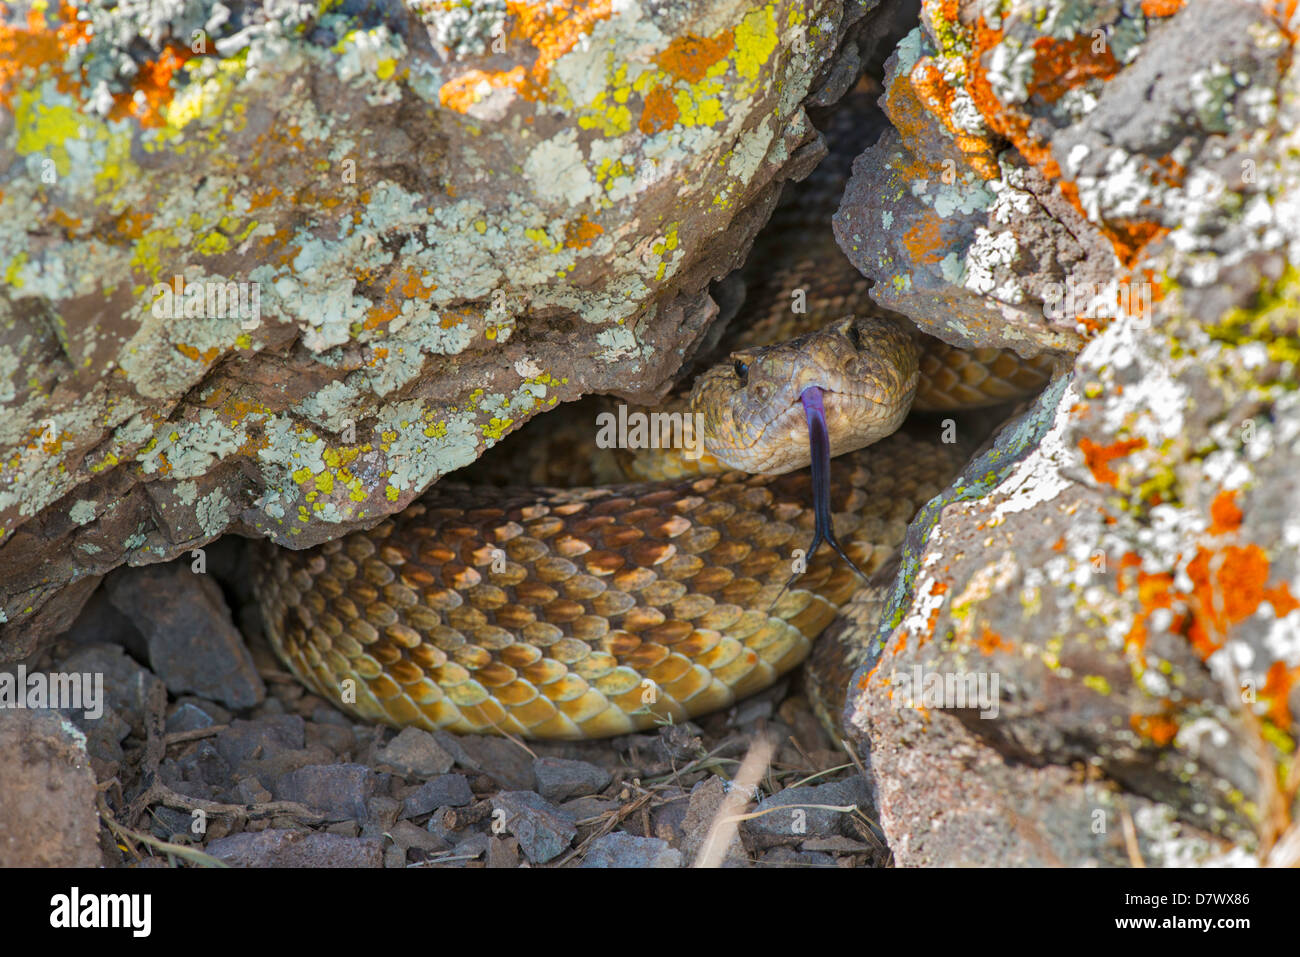 Western Rattlesnake Crotalus oreganus oreganus Lake Isabella, Kern County, California, United States 19 April Adult Viperidae Stock Photo